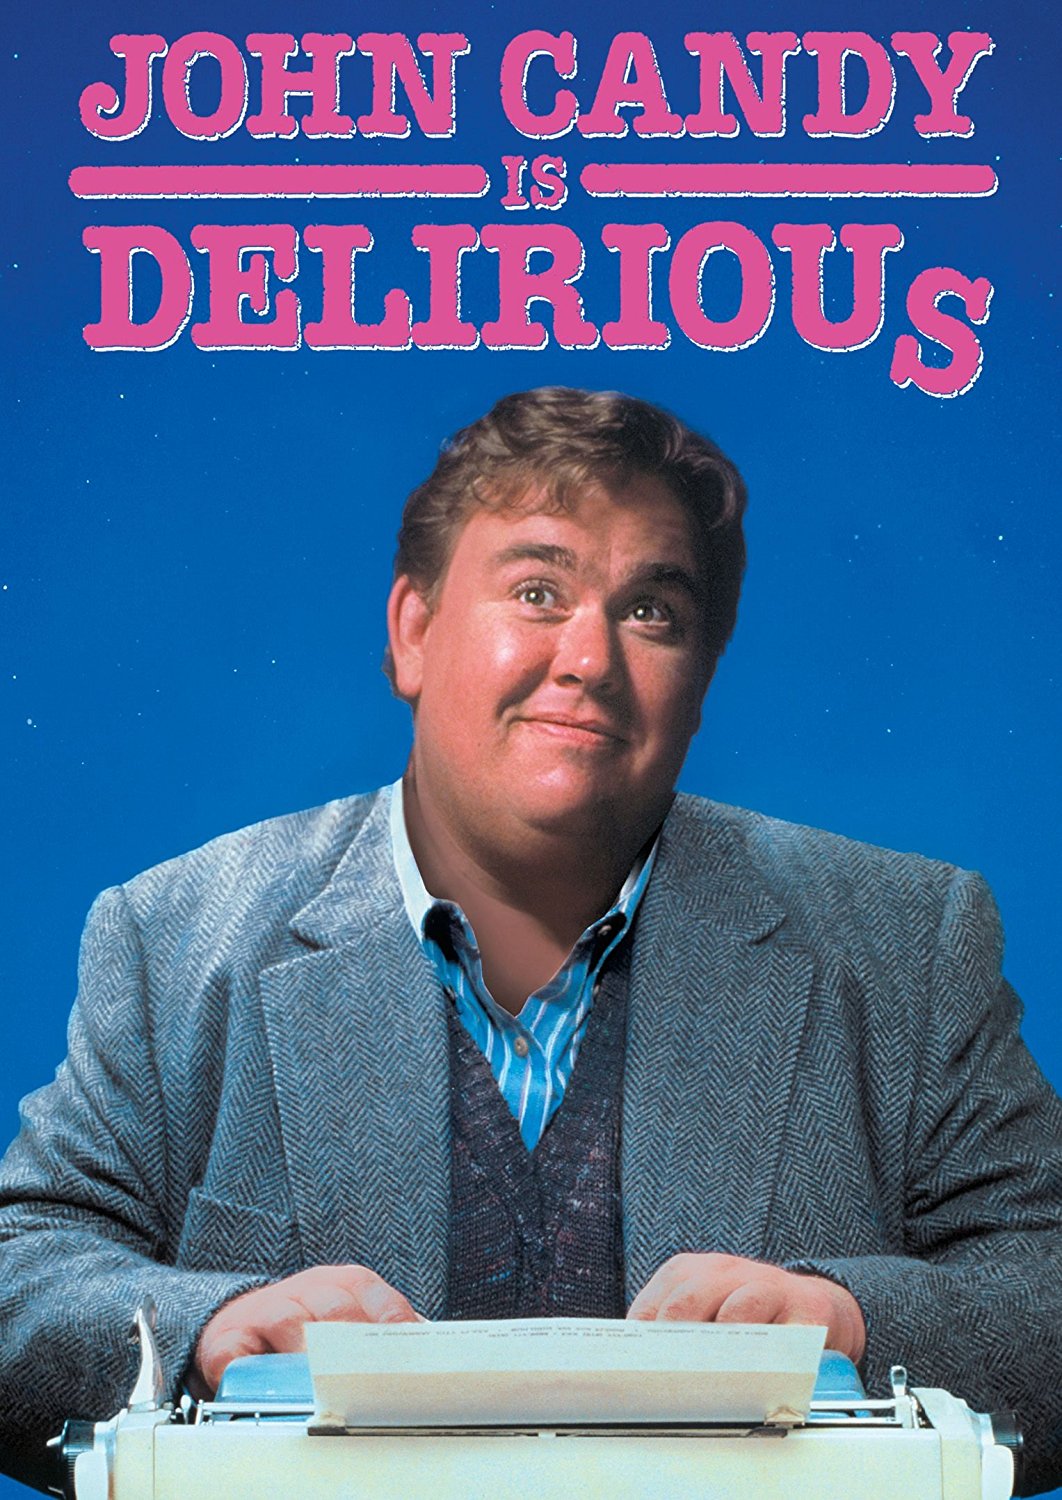 Delirious (1991) starring John Candy, Mariel Hemingway, Emma Samms, Raymond Burr, Dylan Baker